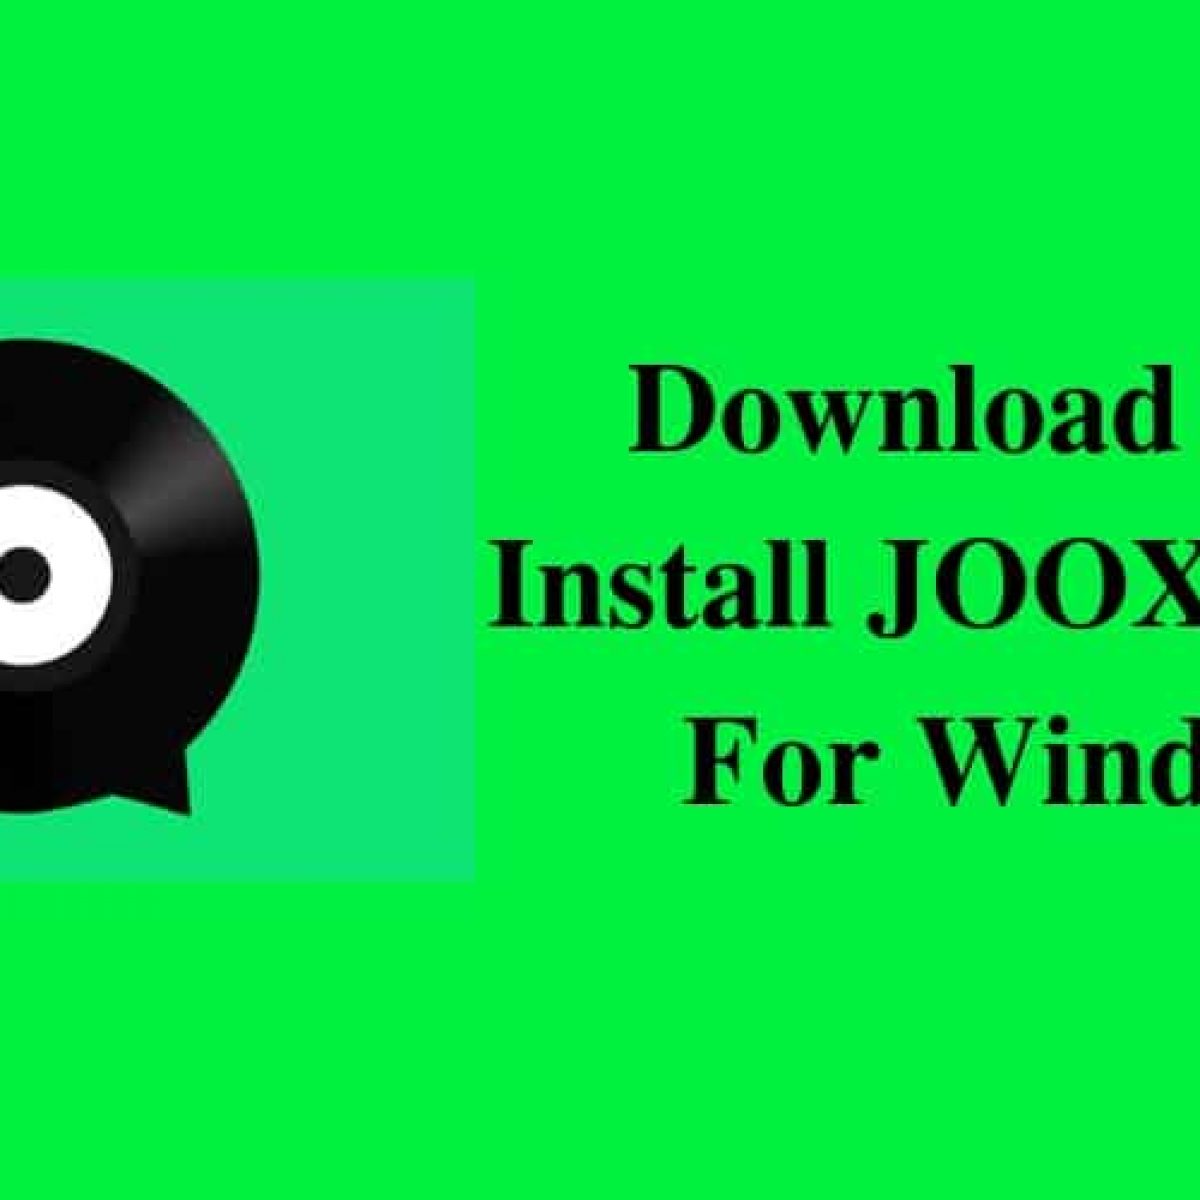 Logo Design Software Free Download Full Version For Windows 8